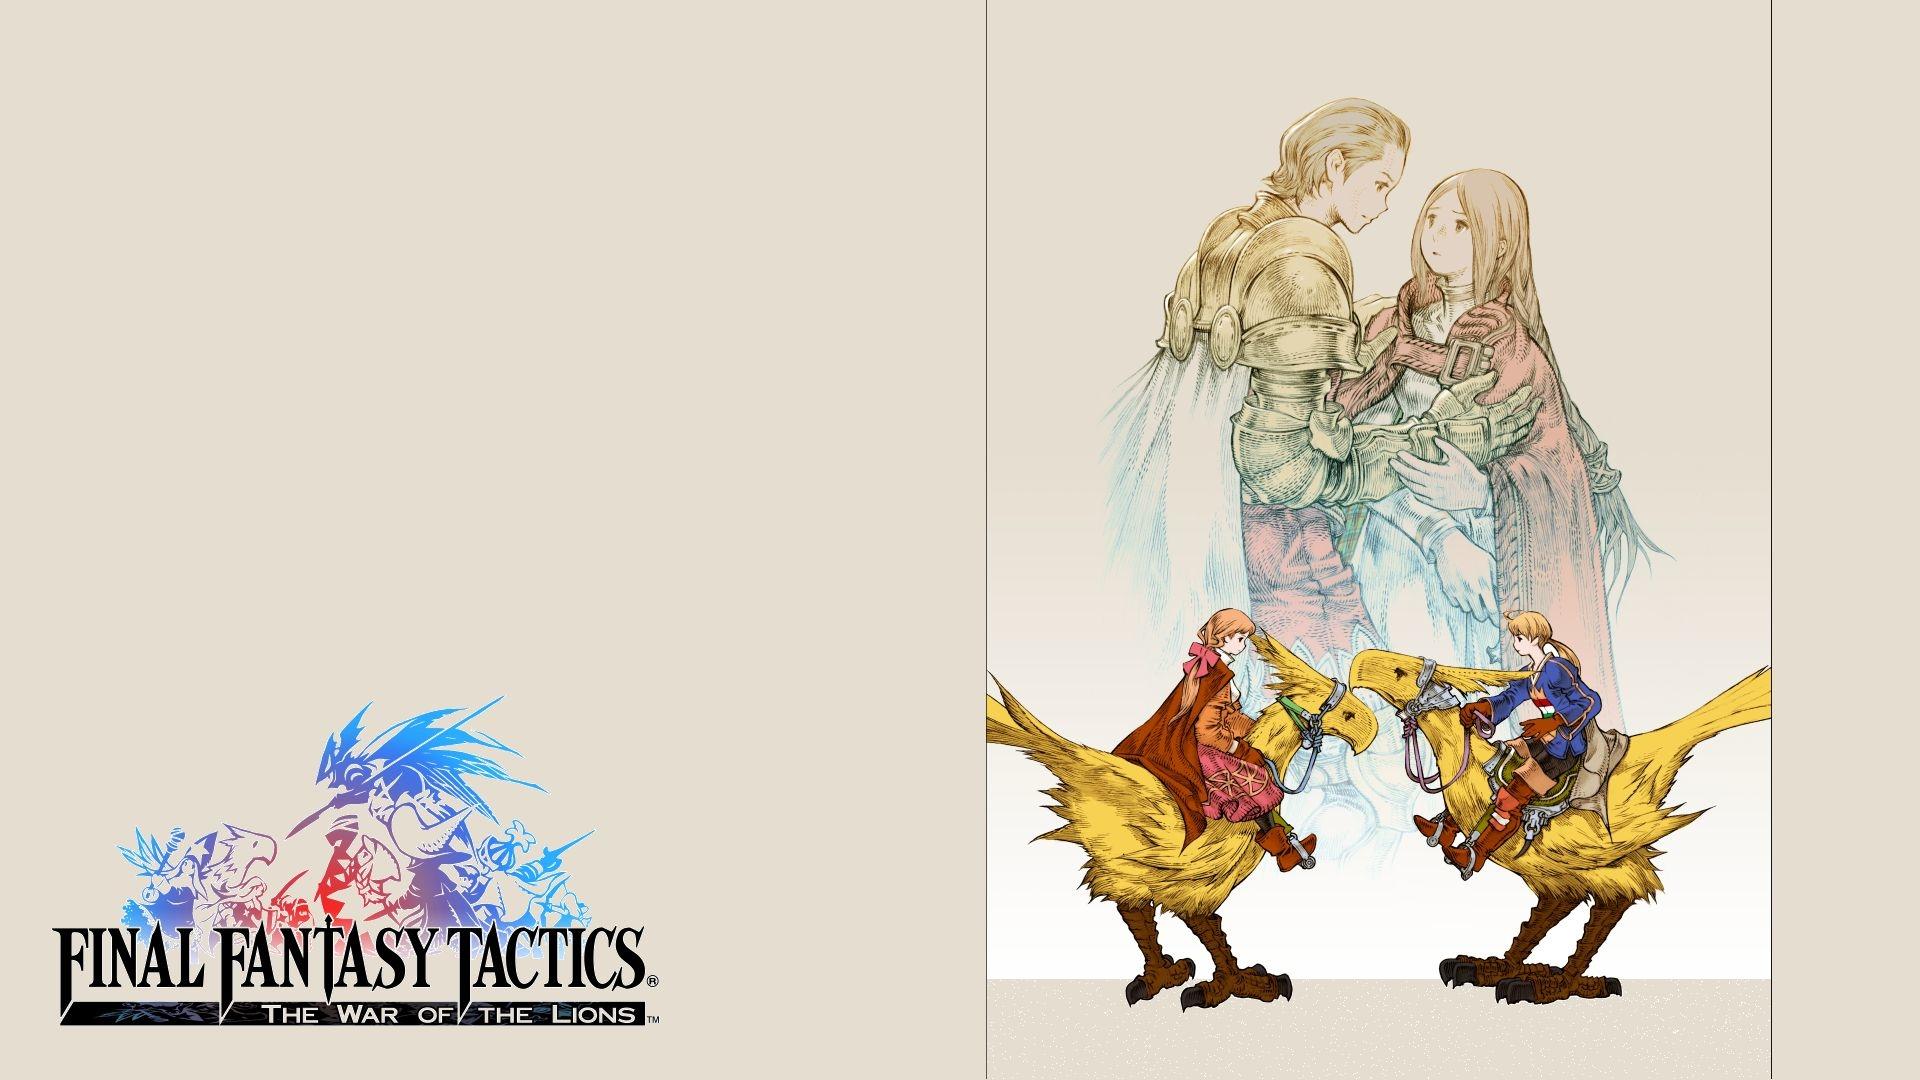 Final Fantasy Tactics at 2048 x 2048 iPad size wallpapers HD quality